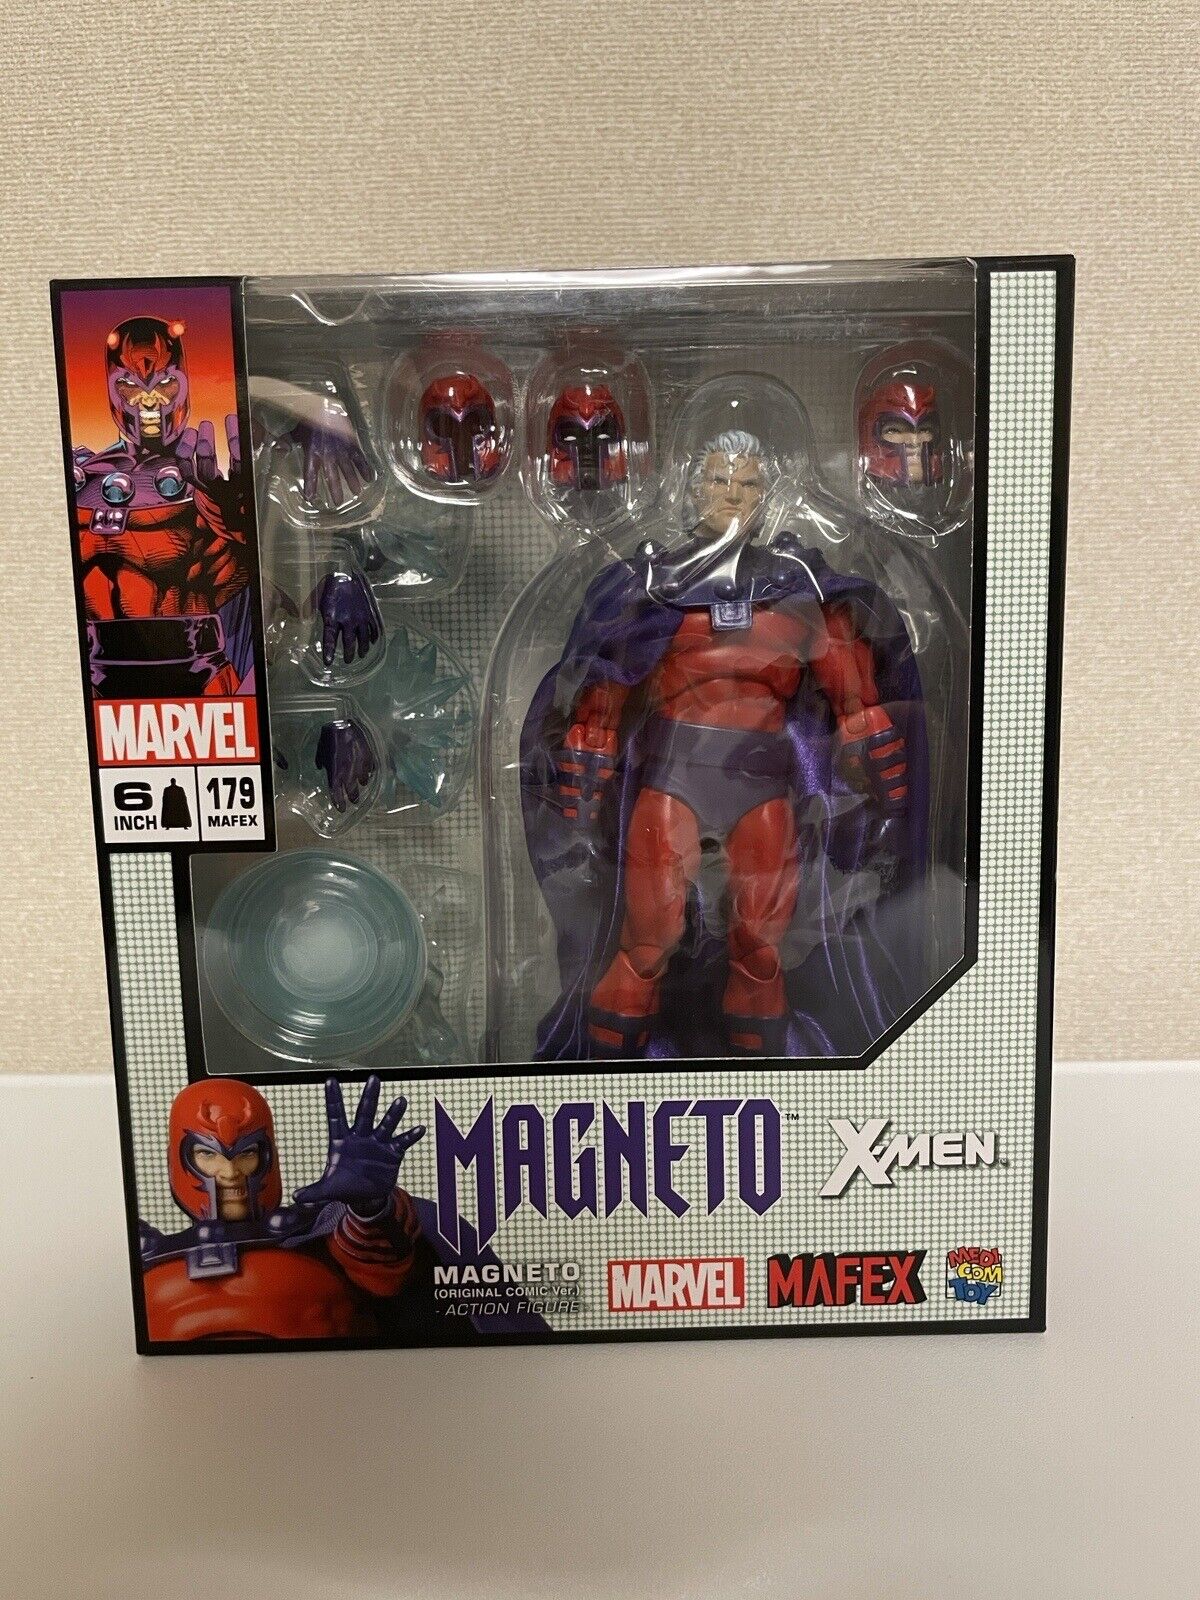 MAFEX No. 179 X-Men Magneto (Original Comic Ver.) Marvel Action Figure